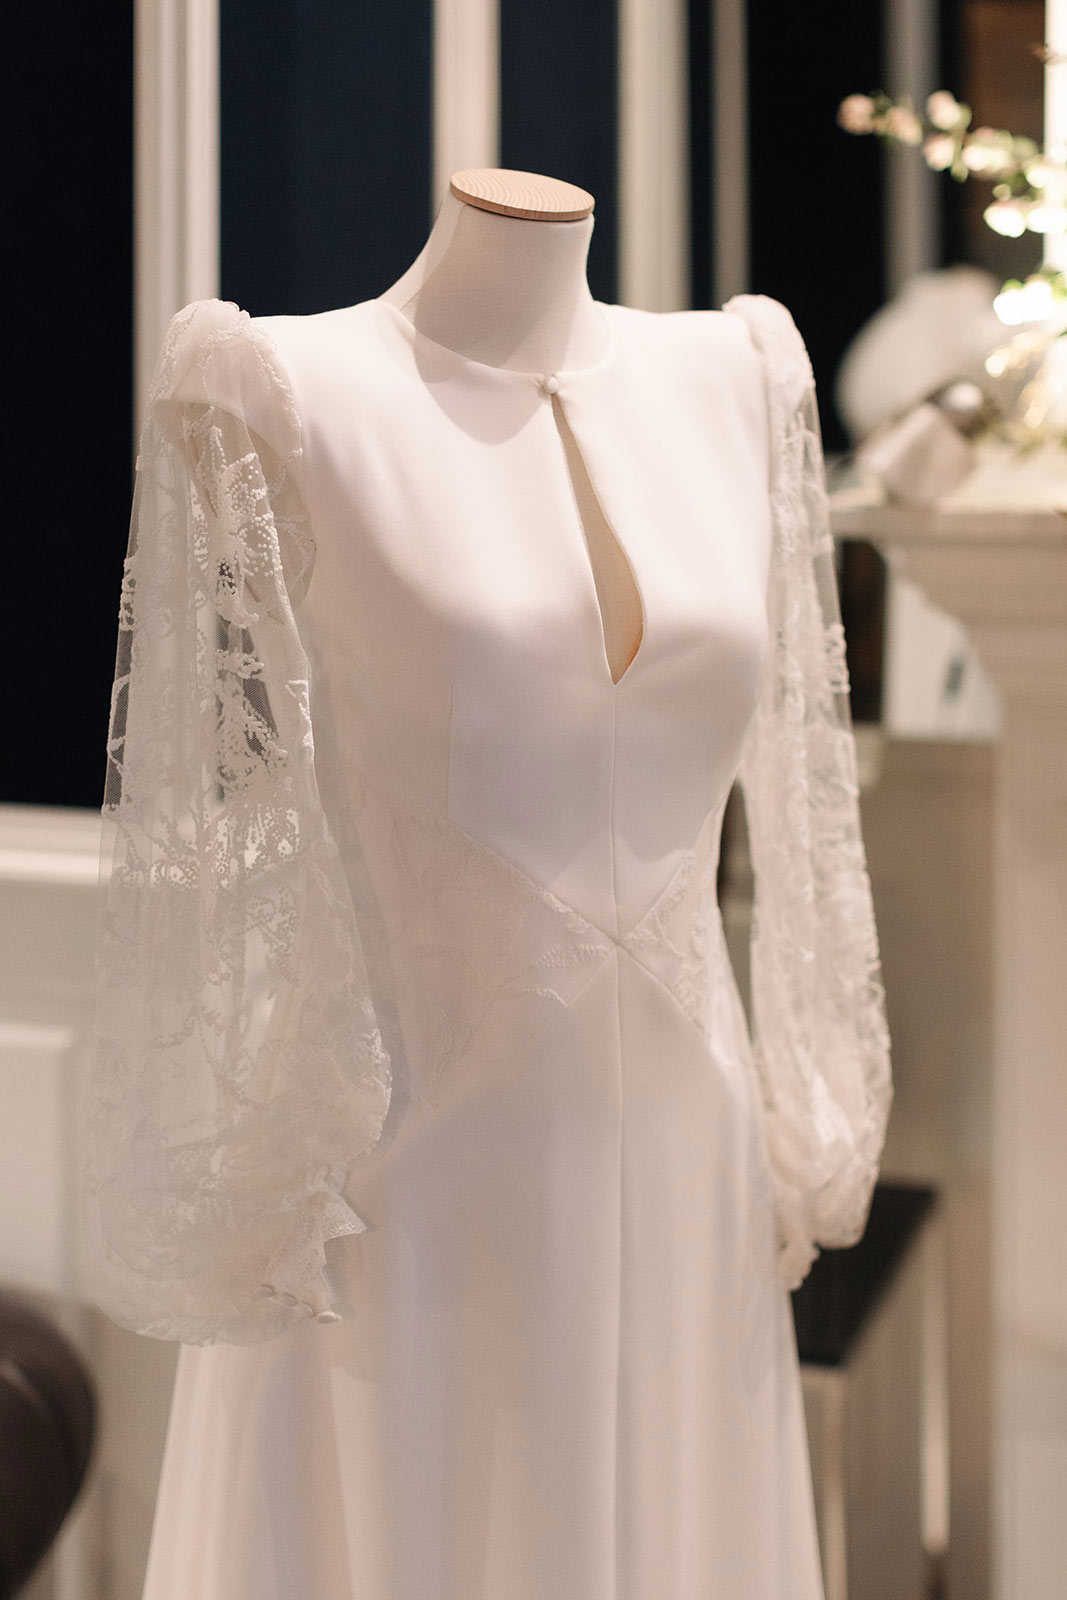 Detalle escote vestido de novia